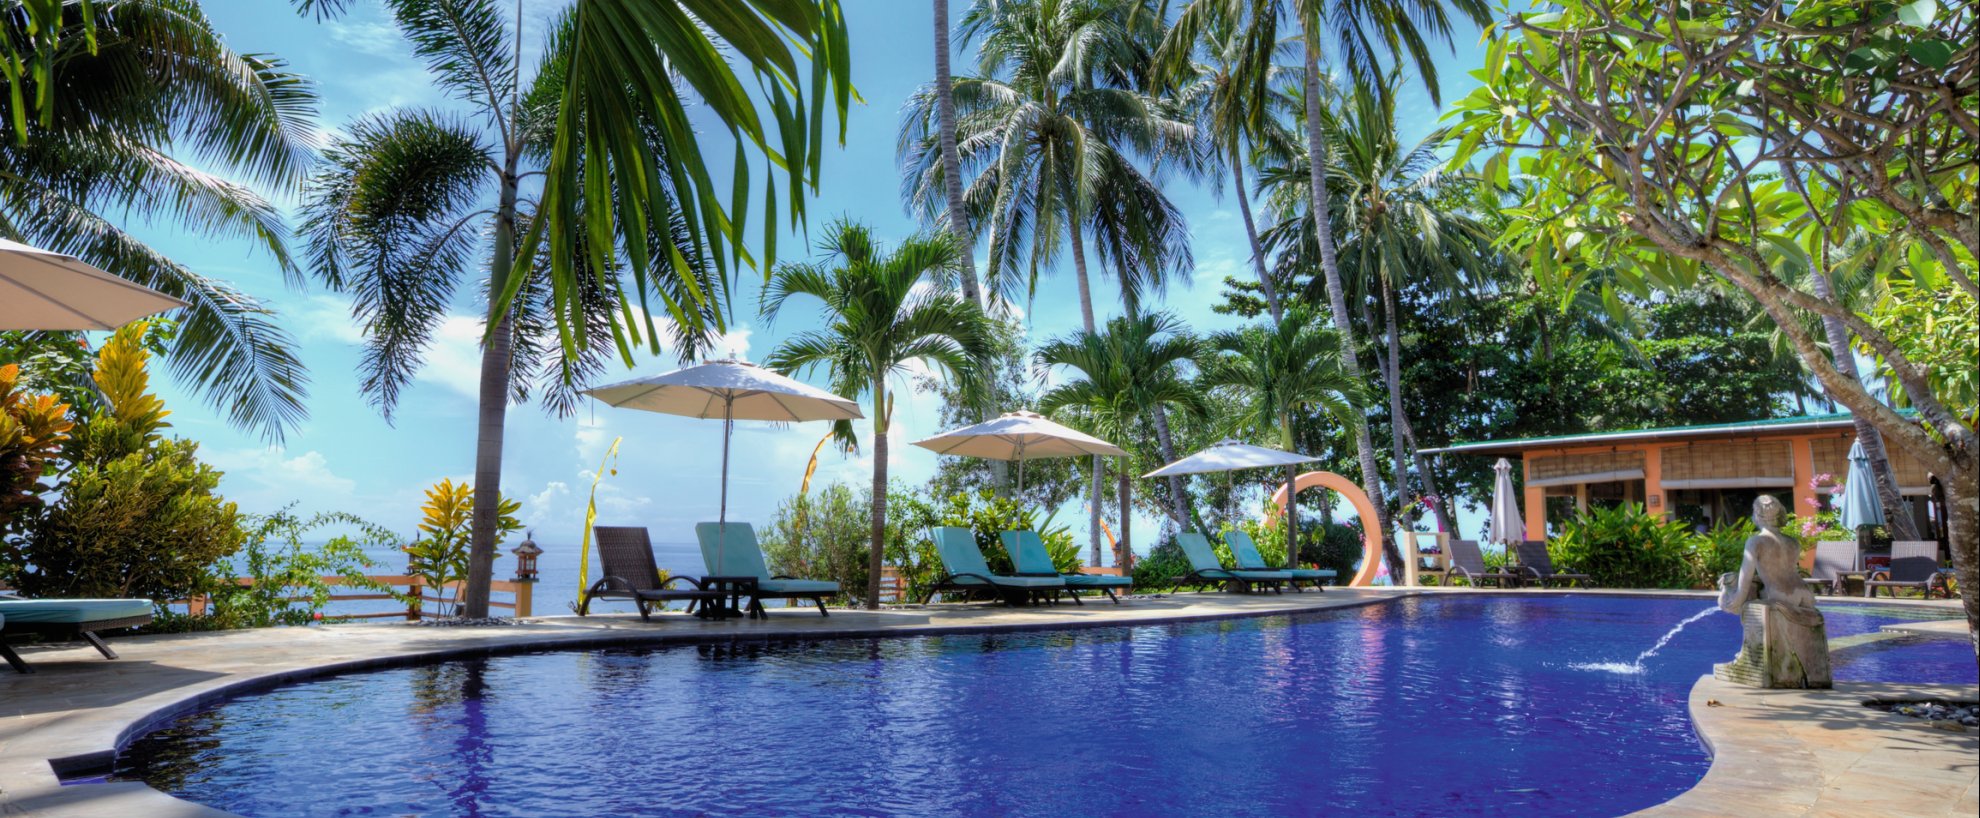 Indonesien Bali Holiway Garden Resort and Spa Pool Swimmingpool